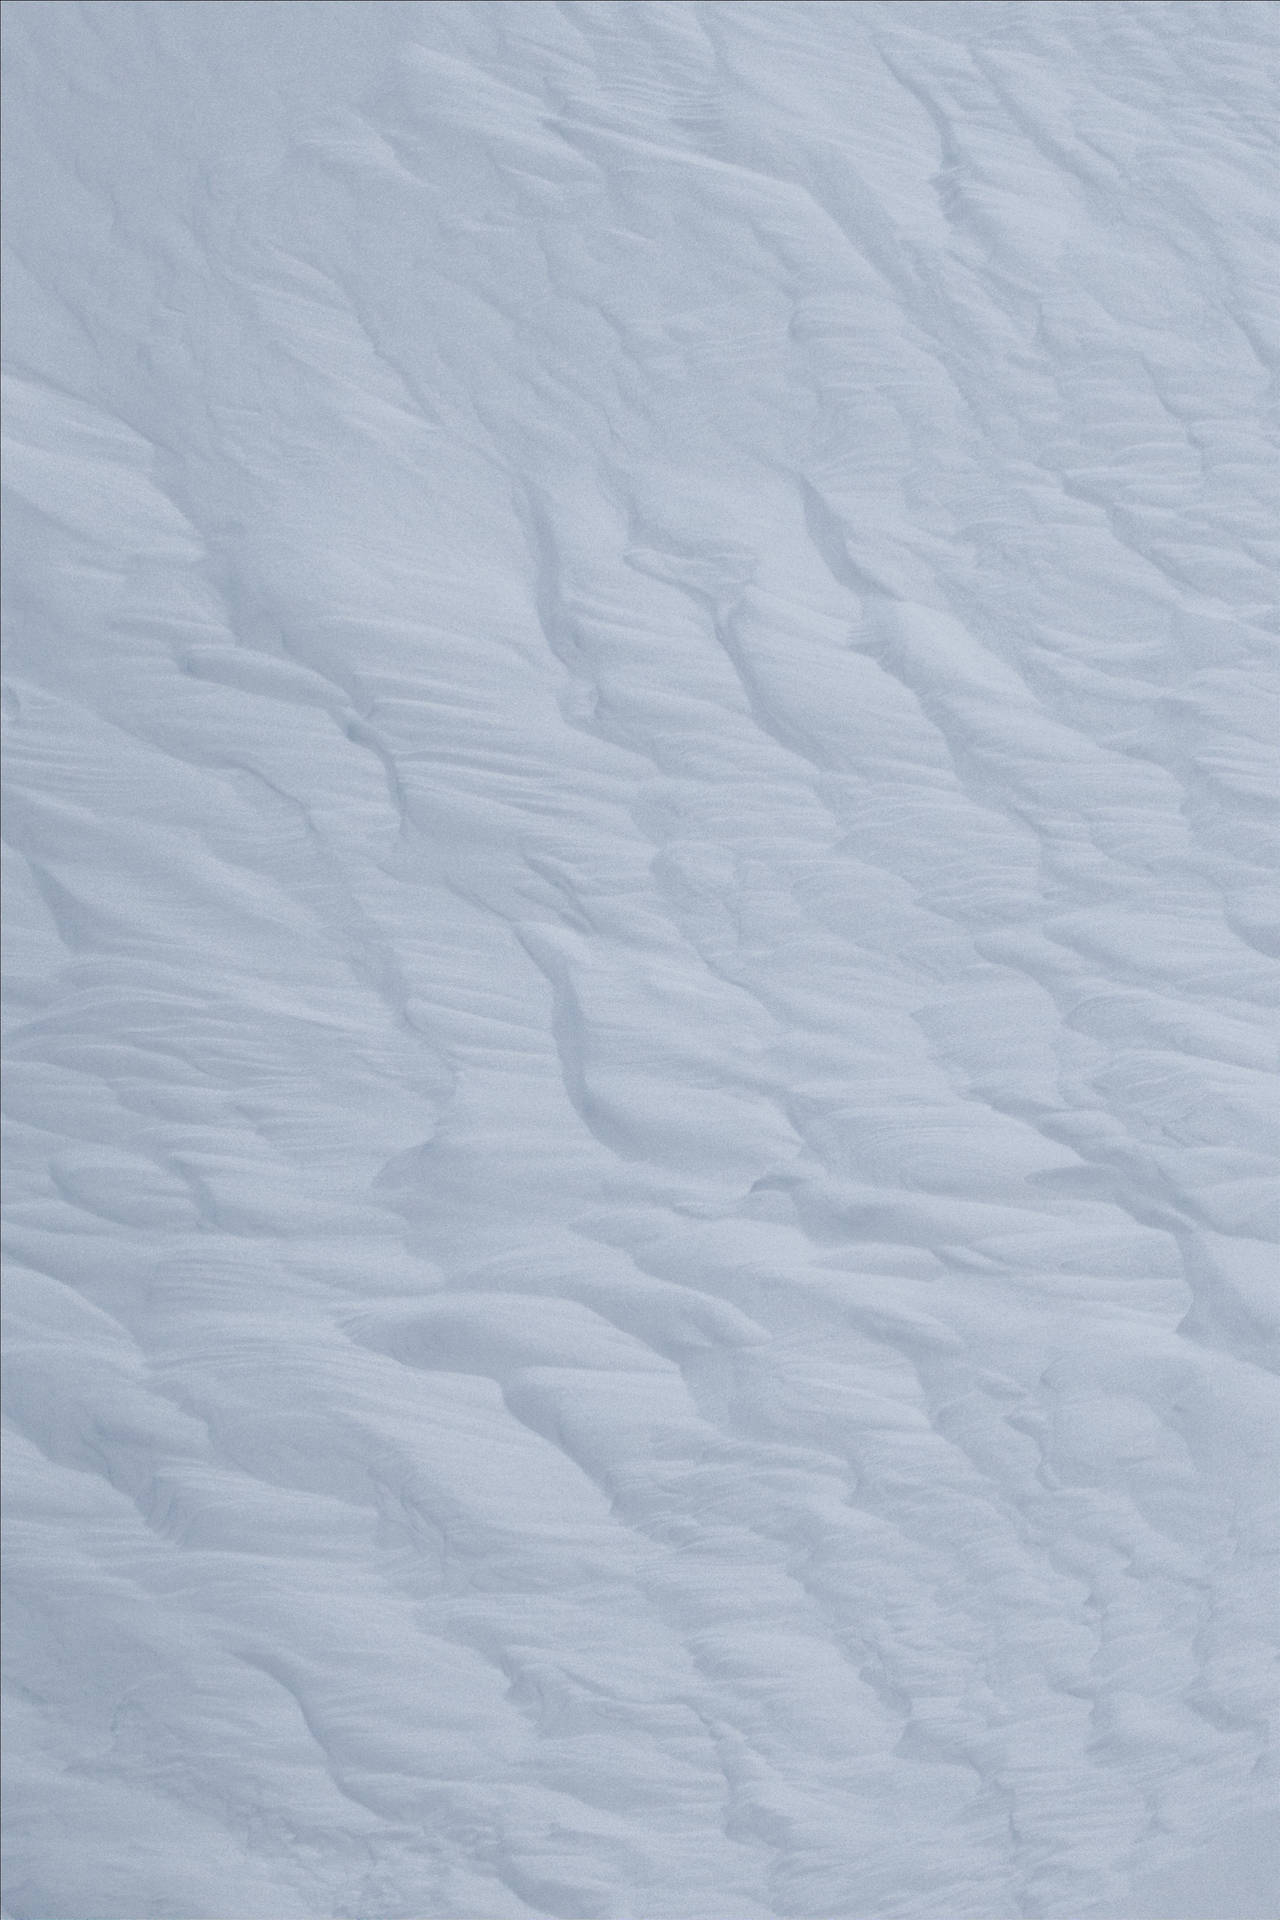 Snow, Relief, Texture, White, Gray